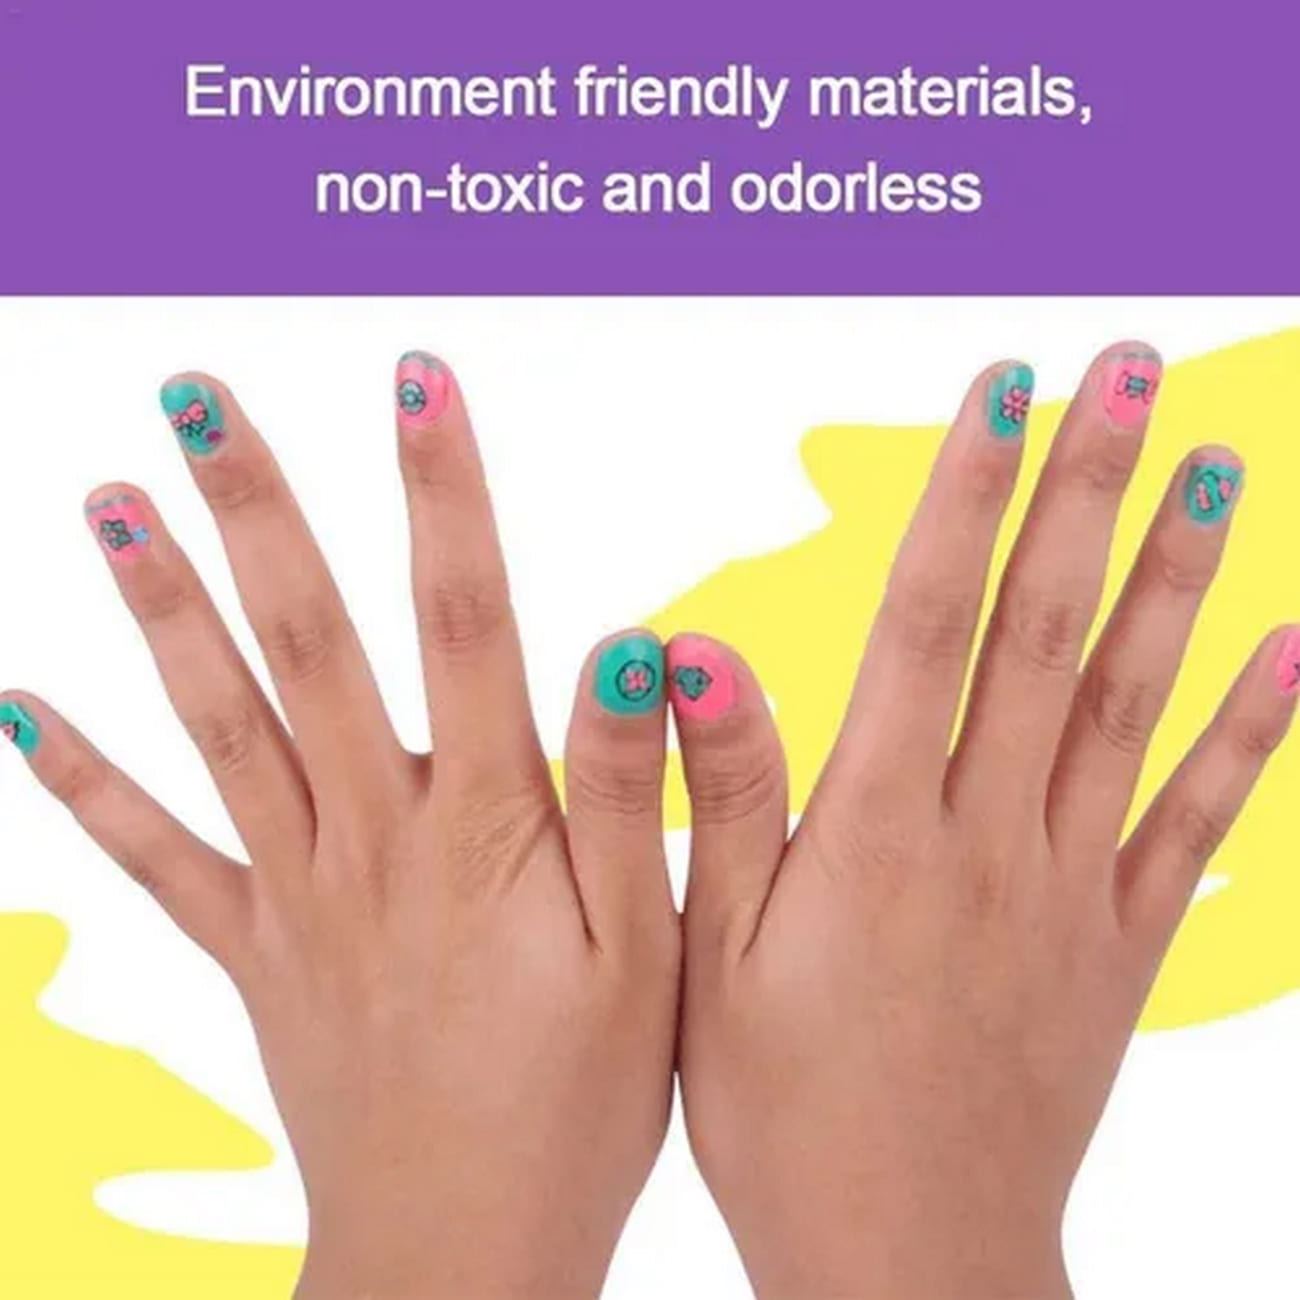 Juguete Kit Uñas Niñas Accesorios Set Manicure Esmaltes 